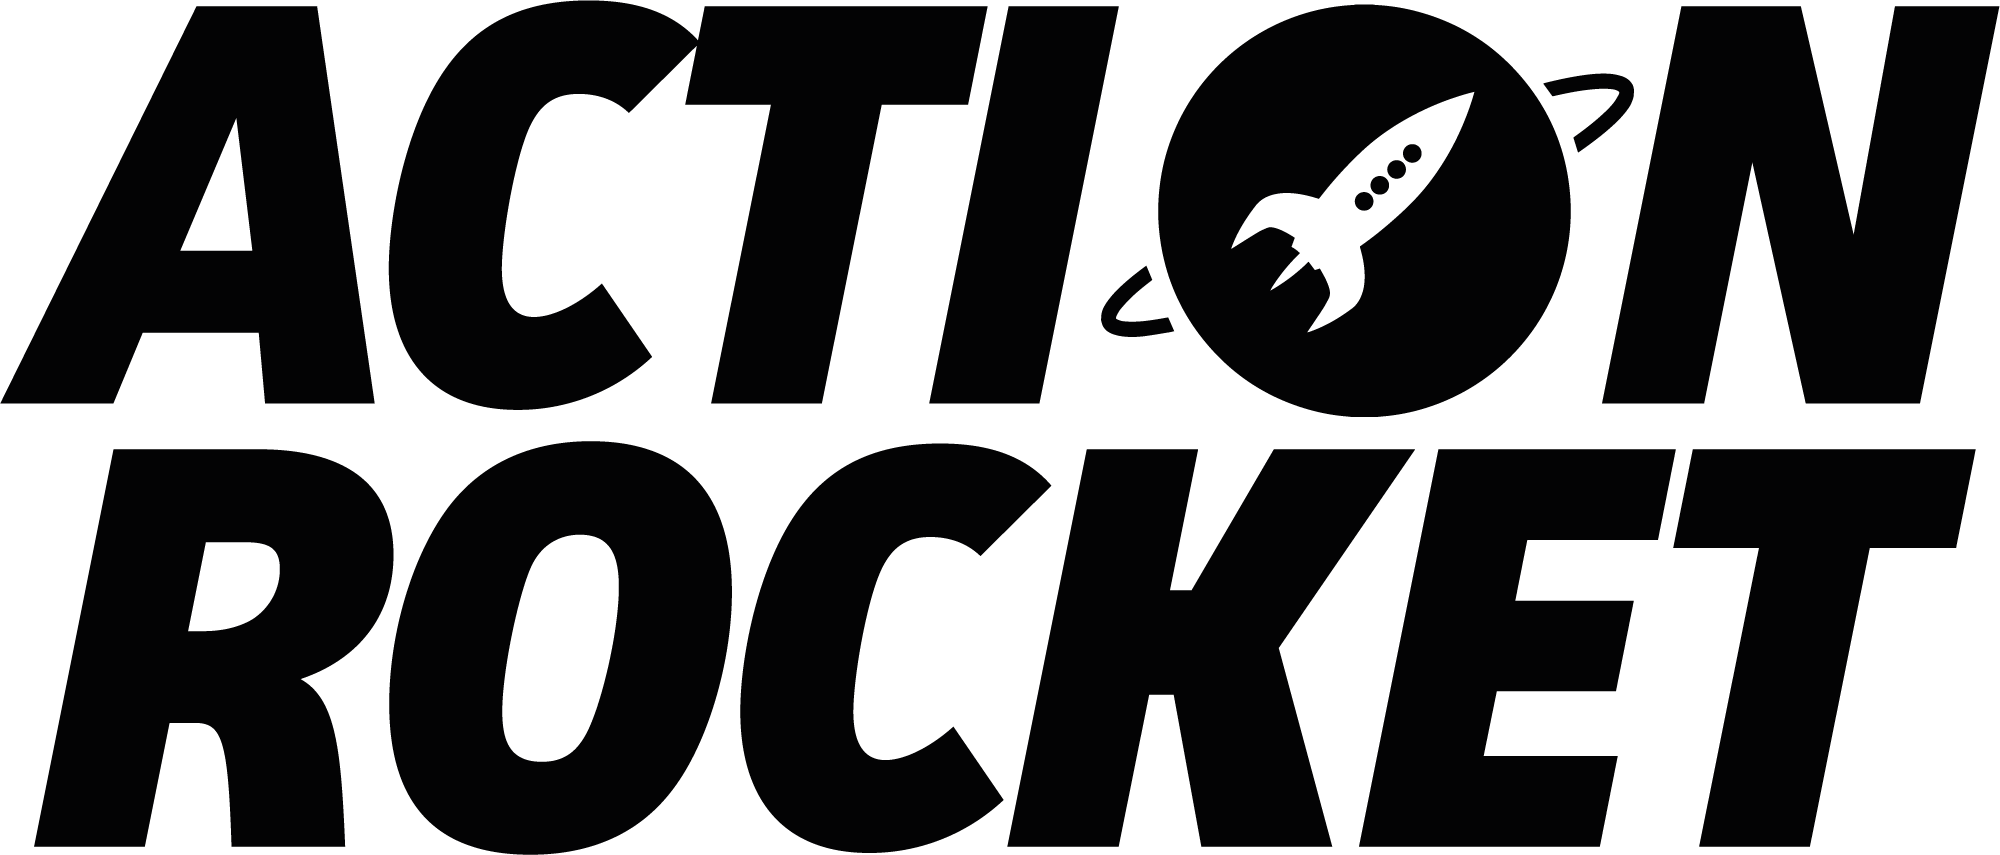 Action Rocket logo.png